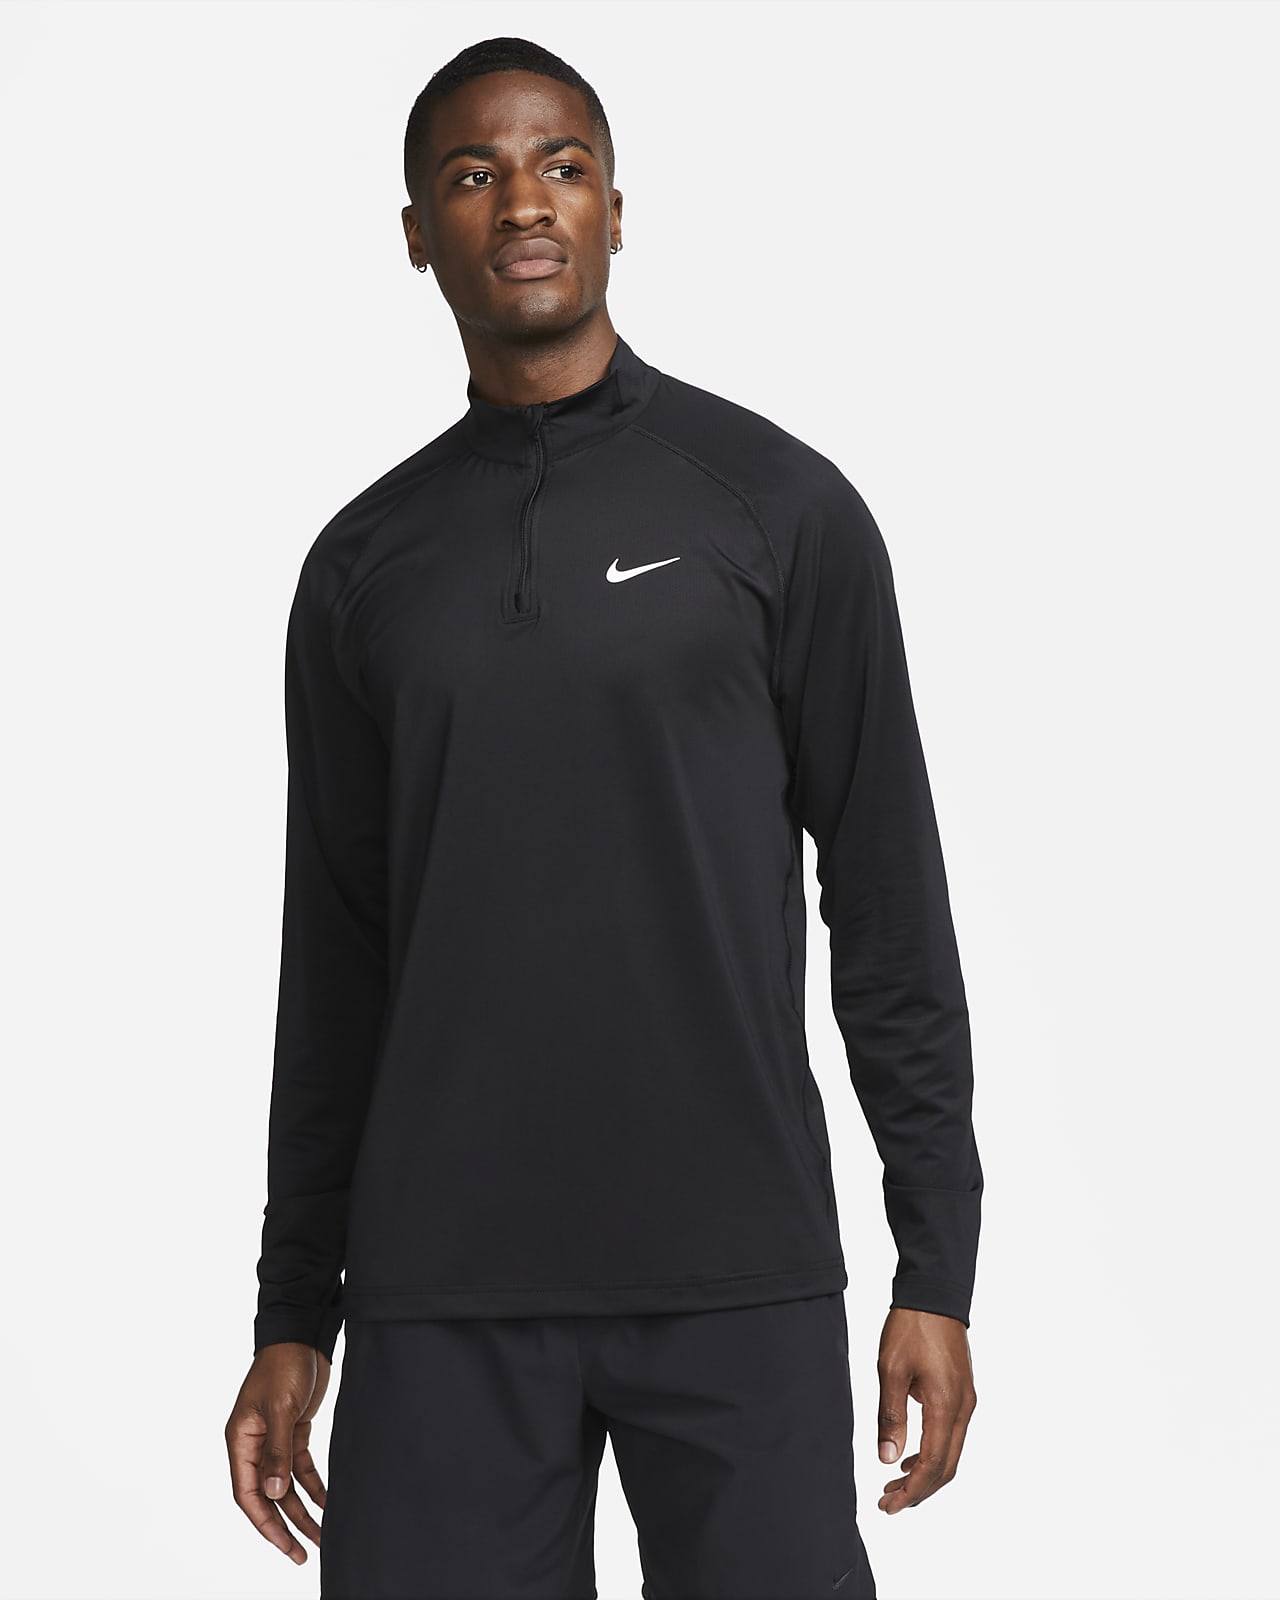 Nike Ready Men's 1/4-Zip Top. Nike.com